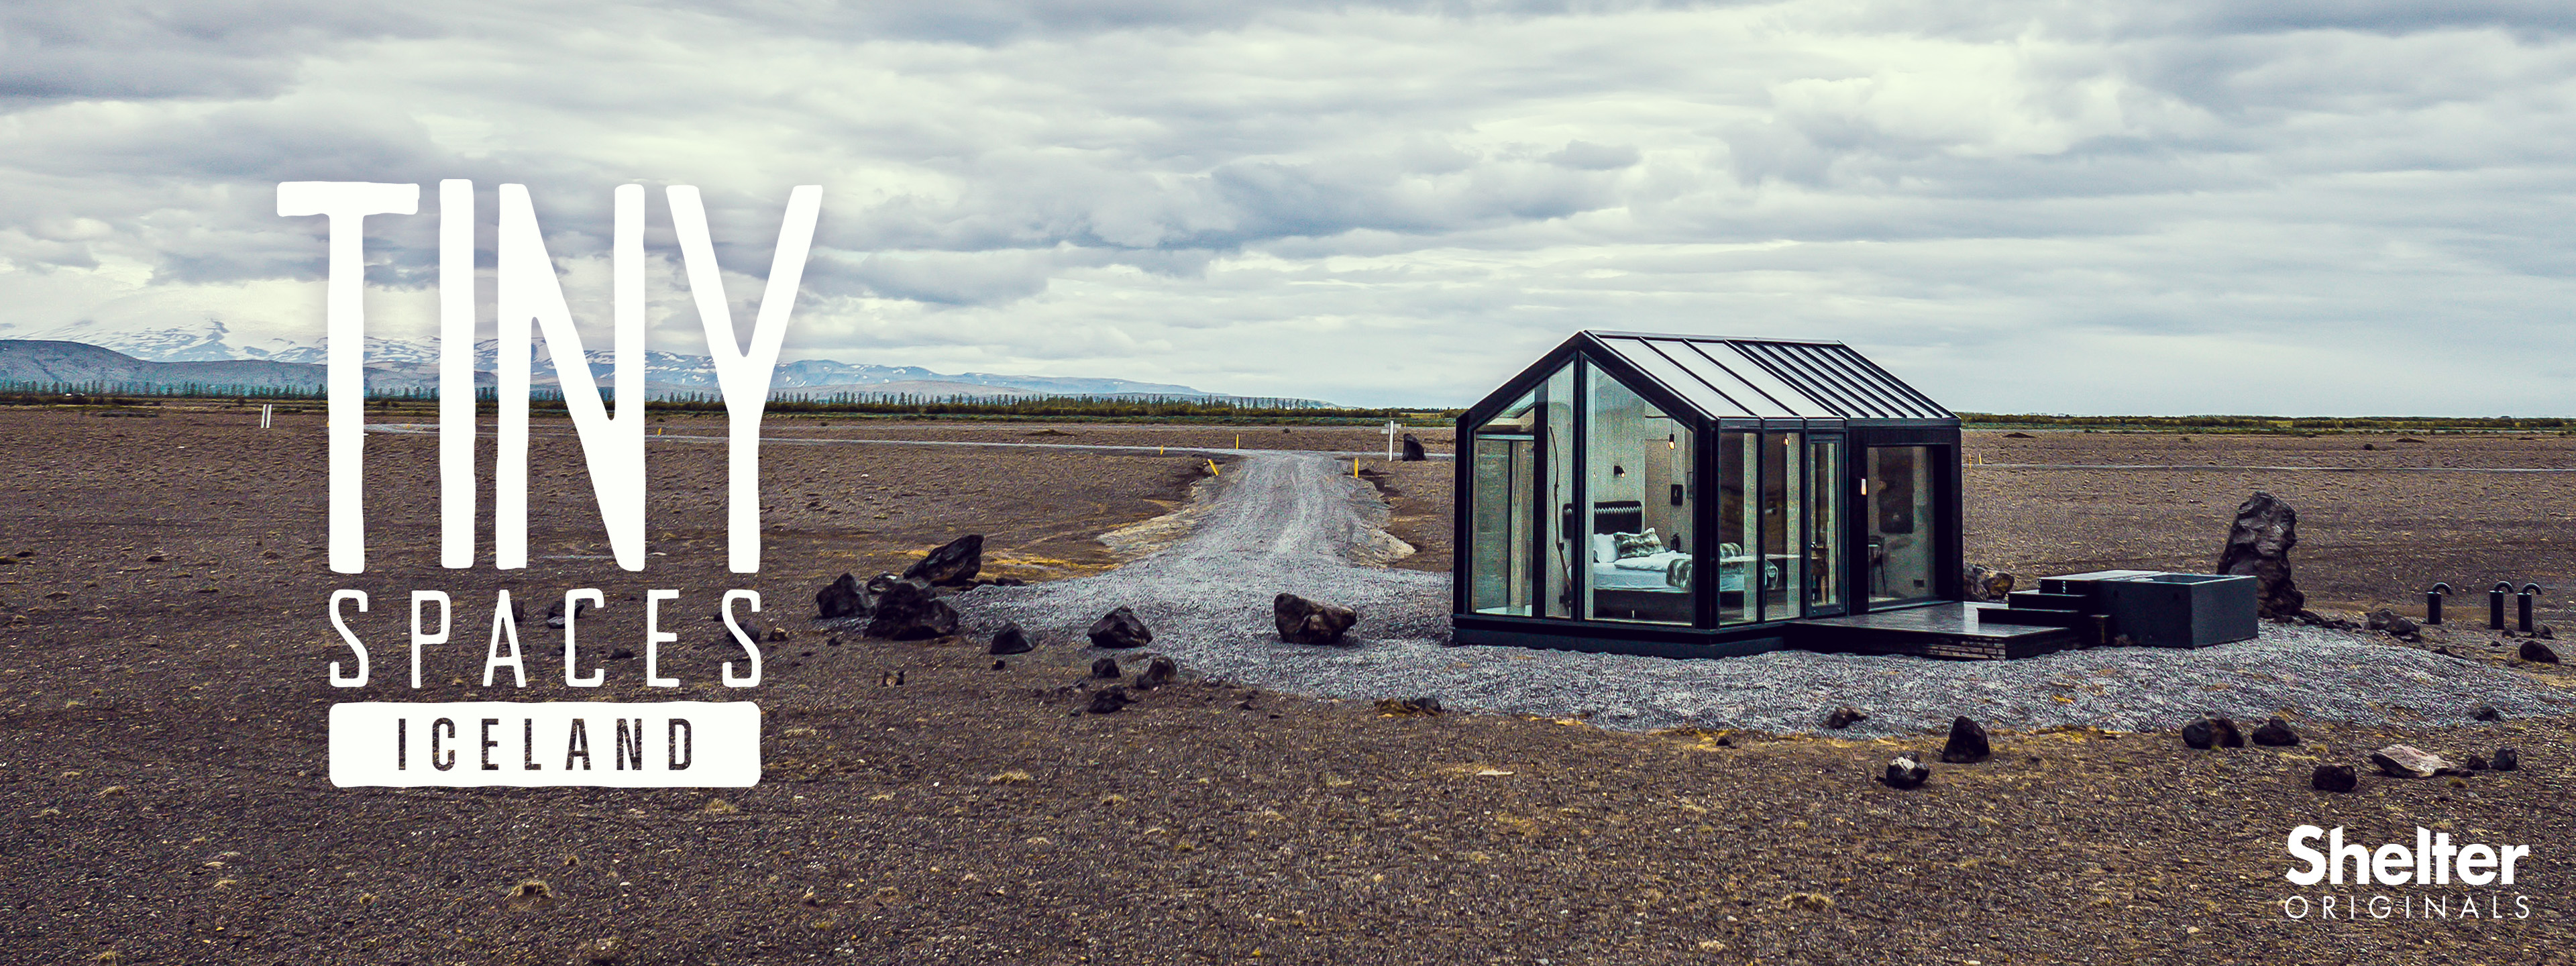 Tiny Spaces: Iceland